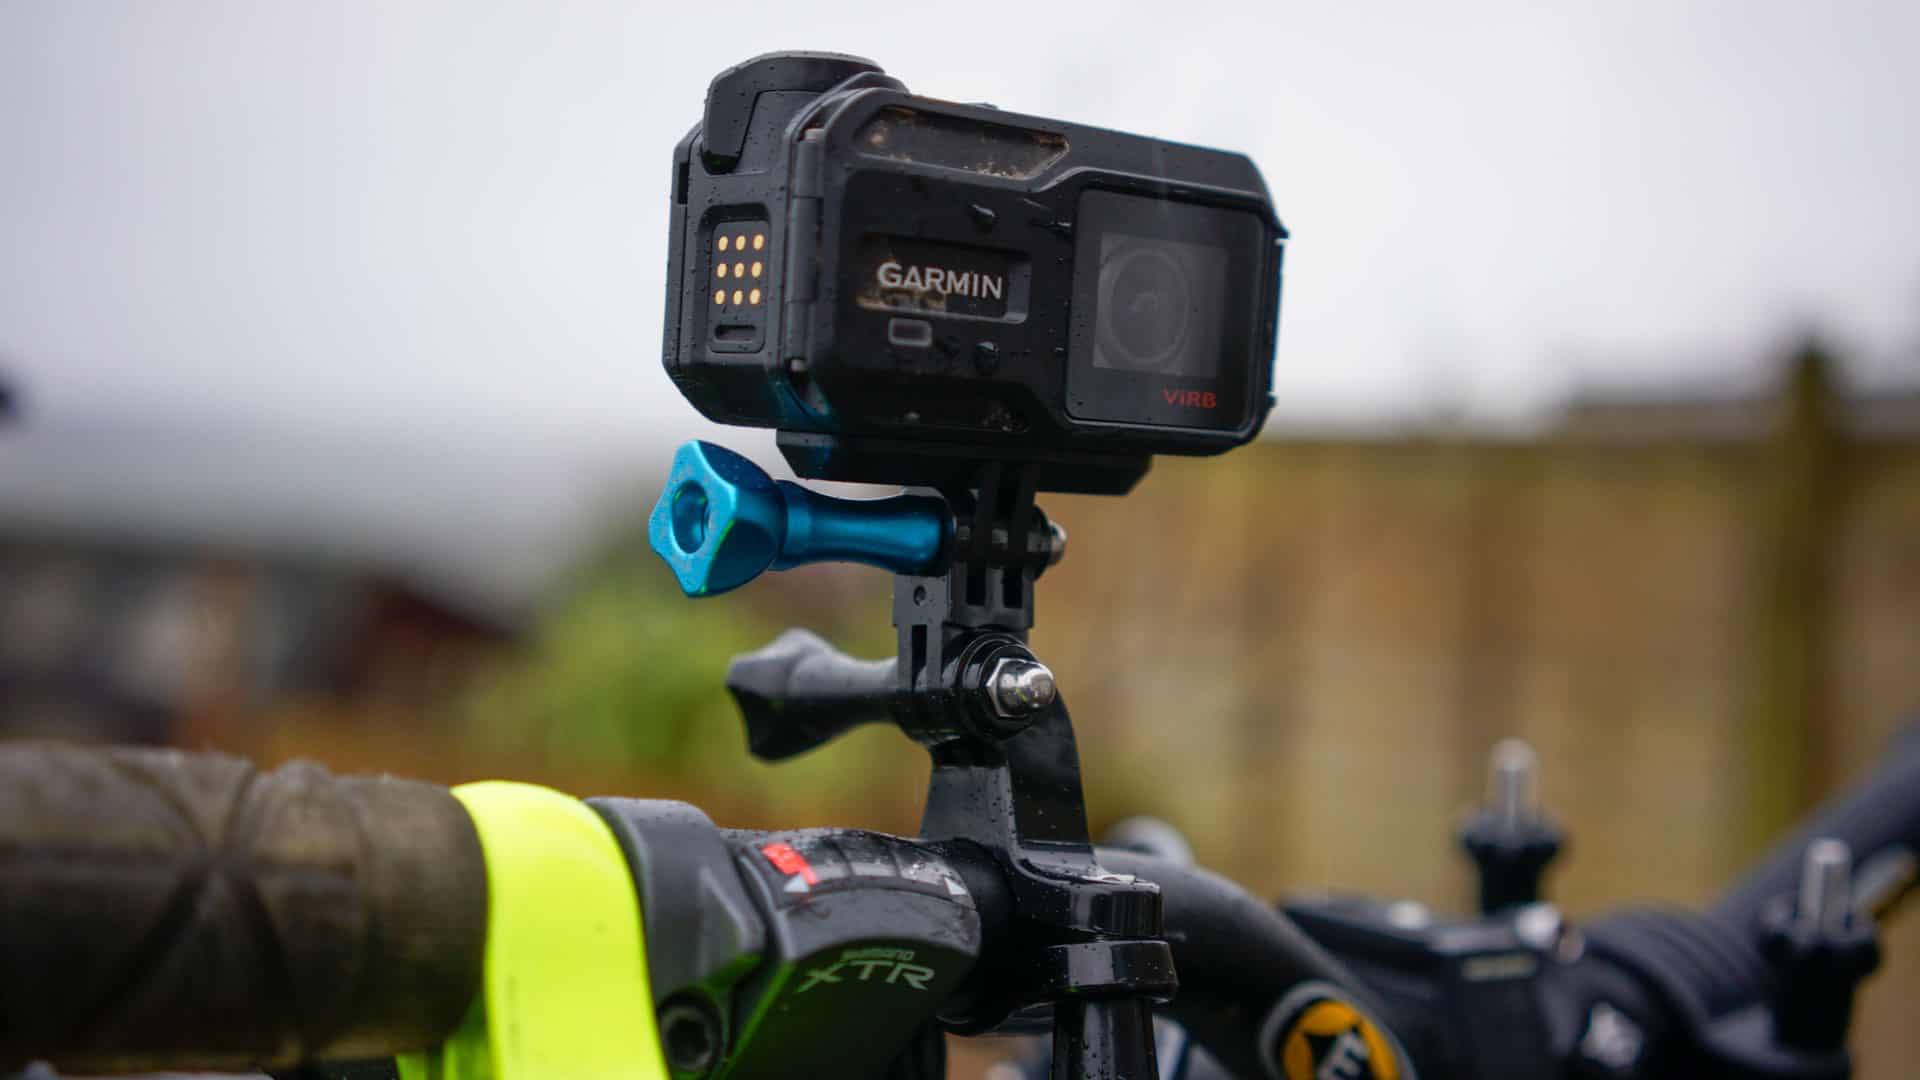 Garmin VIRB XE Review This Camera Really Waterproof?